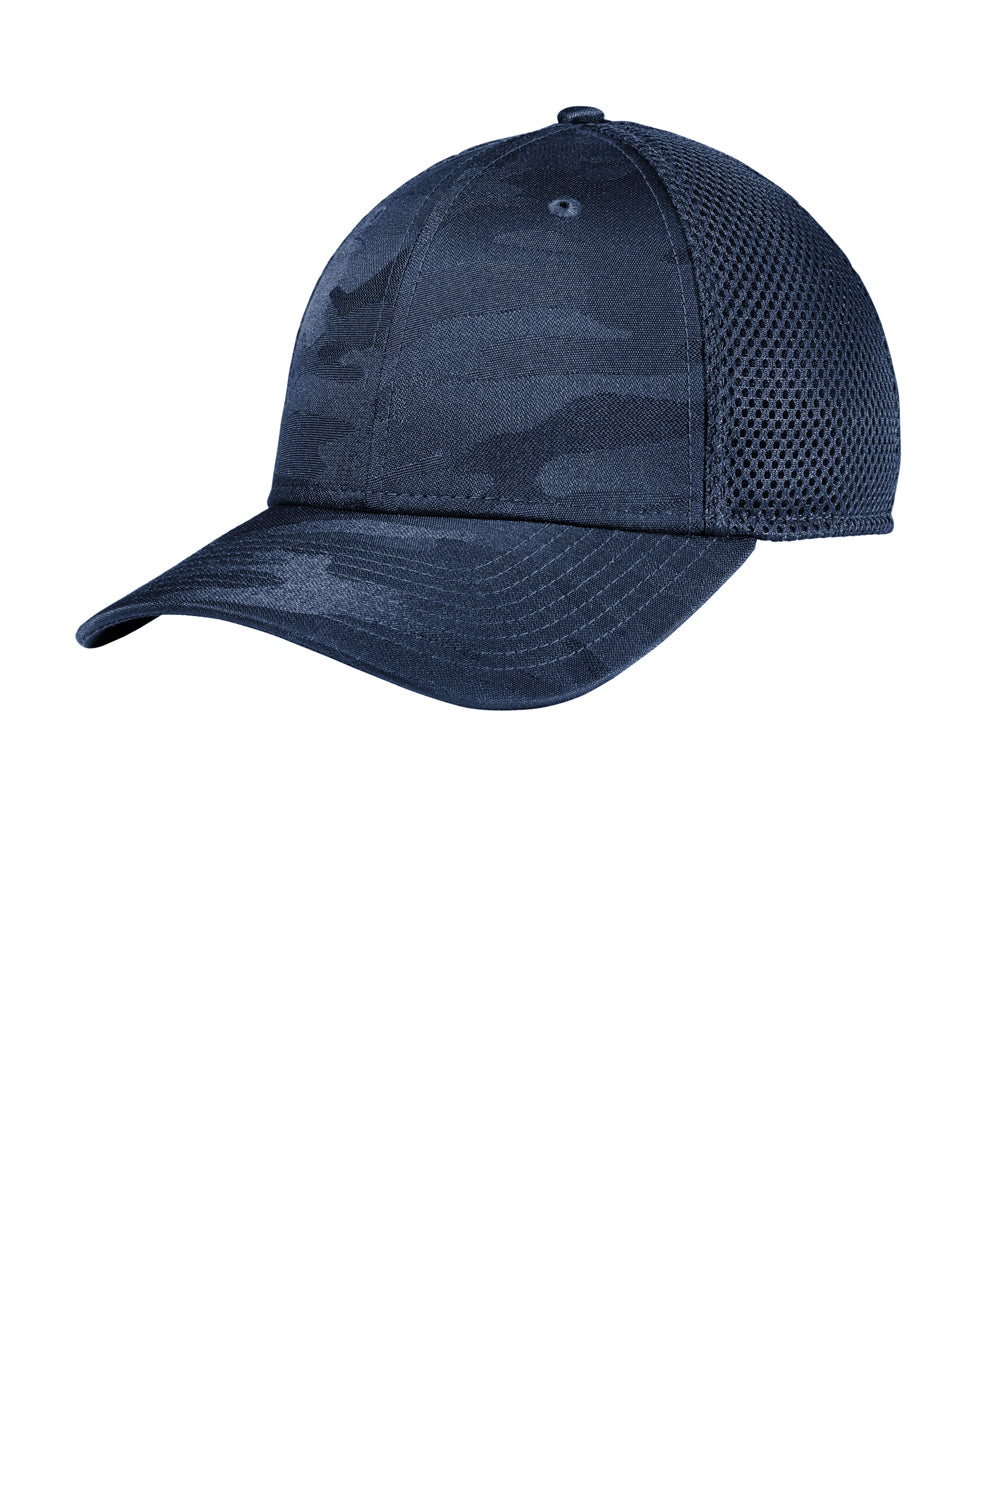 New Era NE1091 Tonal Camo Tech Mesh Stretch Fit Hat Navy Blue Camo Front